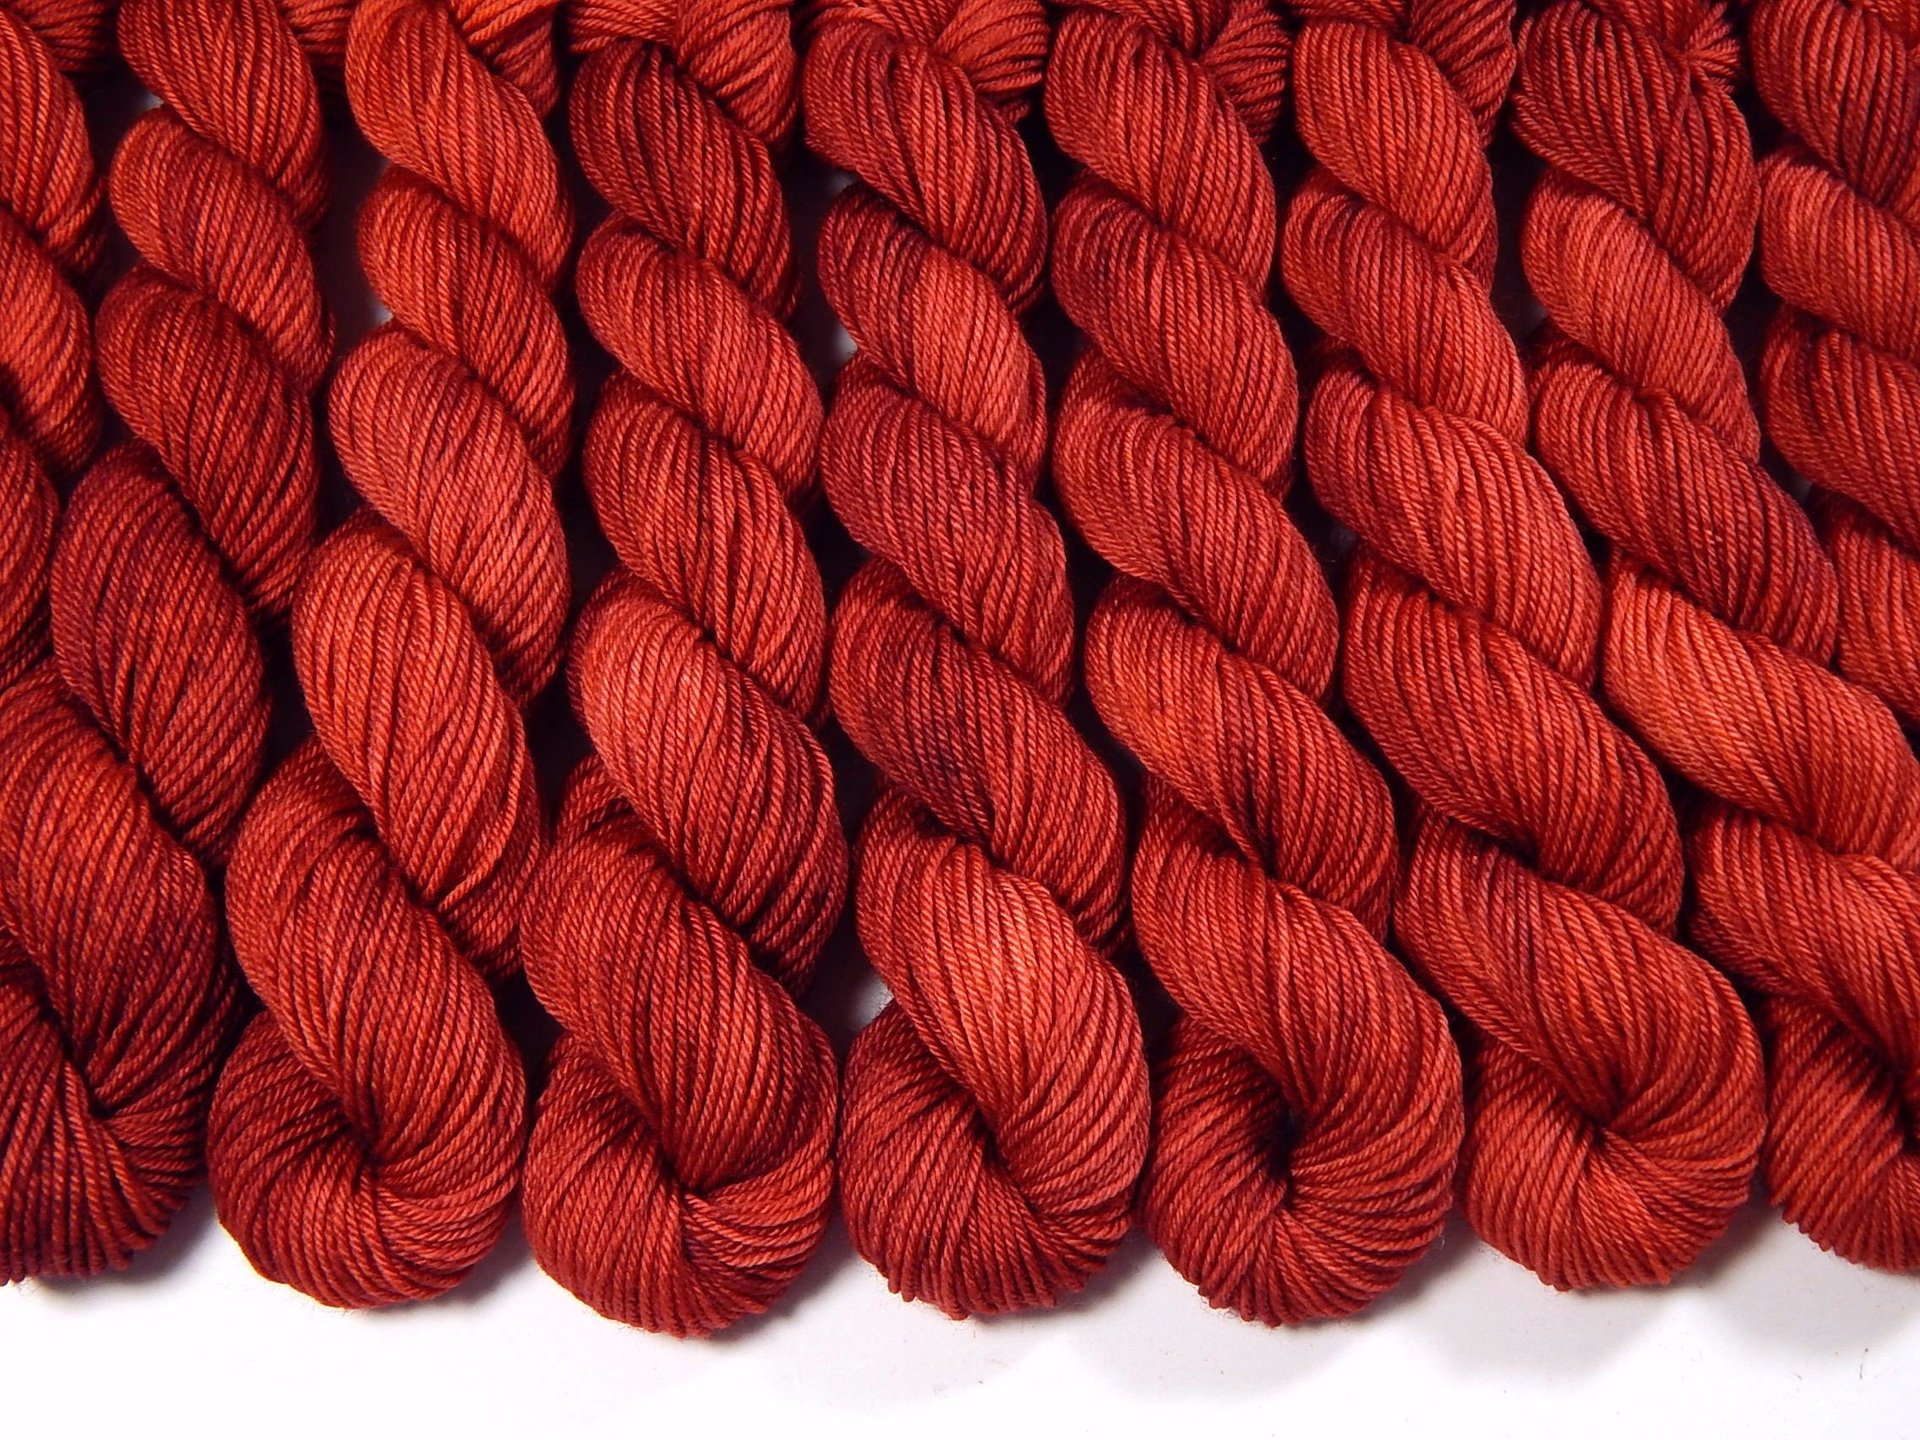 Sock Yarn Mini Skeins, Hand Dyed Yarn Mini, Sock Weight 4 Ply Superwash Merino Wool - Cinnabar - Indie Dyer Red Fingering Knitting Yarn